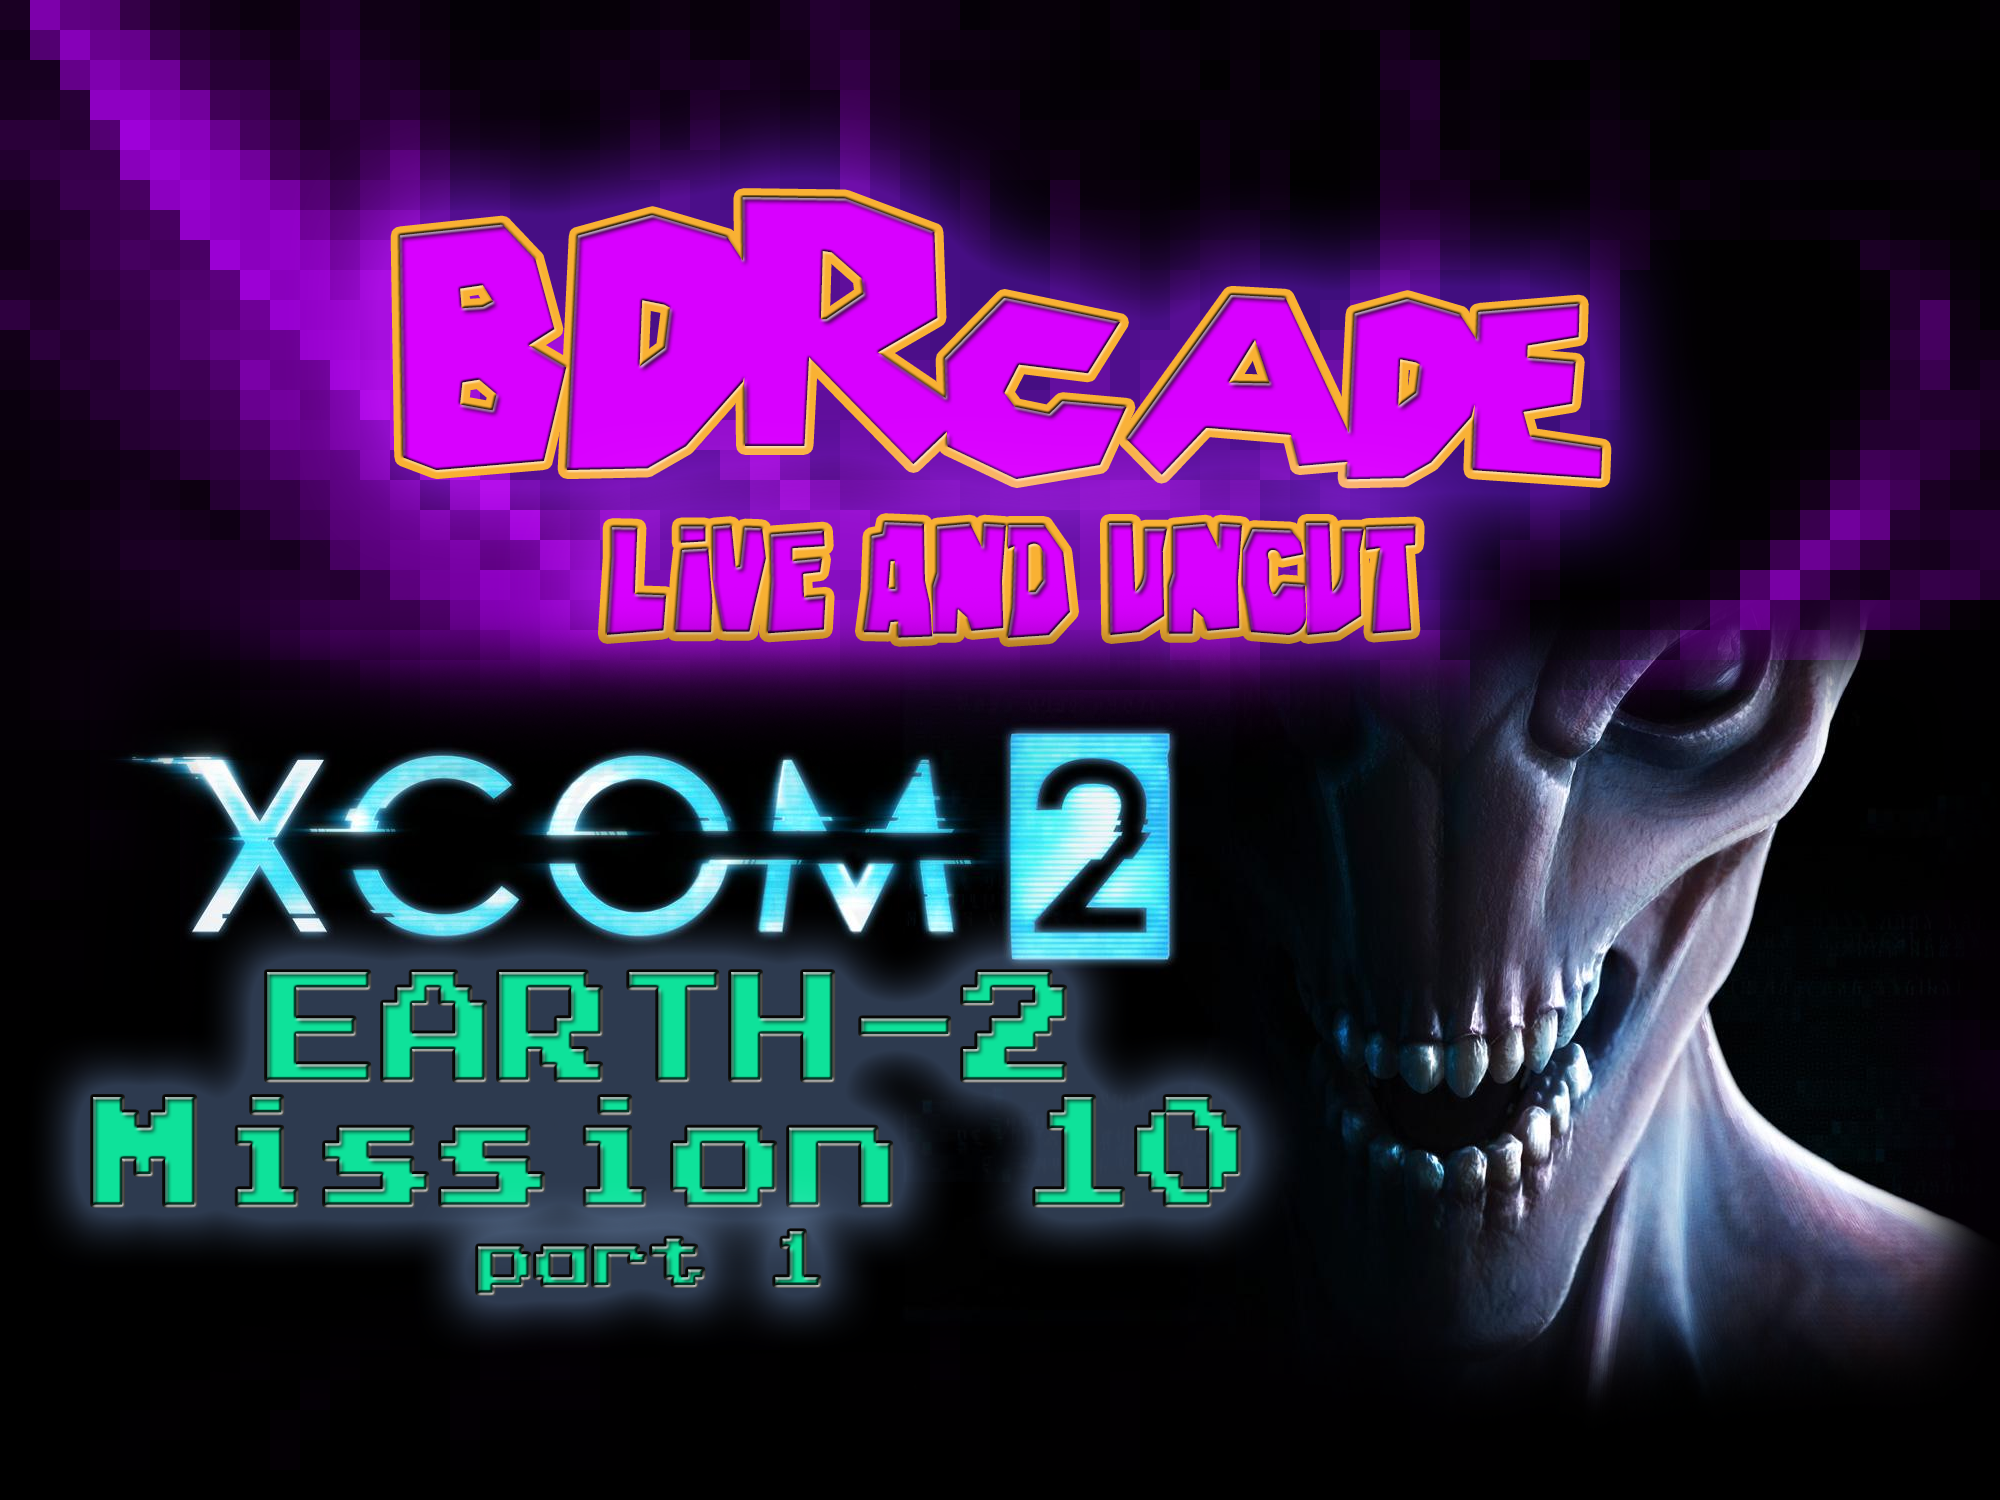 XCOM 2 (Earth-2) : Mission 10 Part 1 – A BDRcade Live Stream